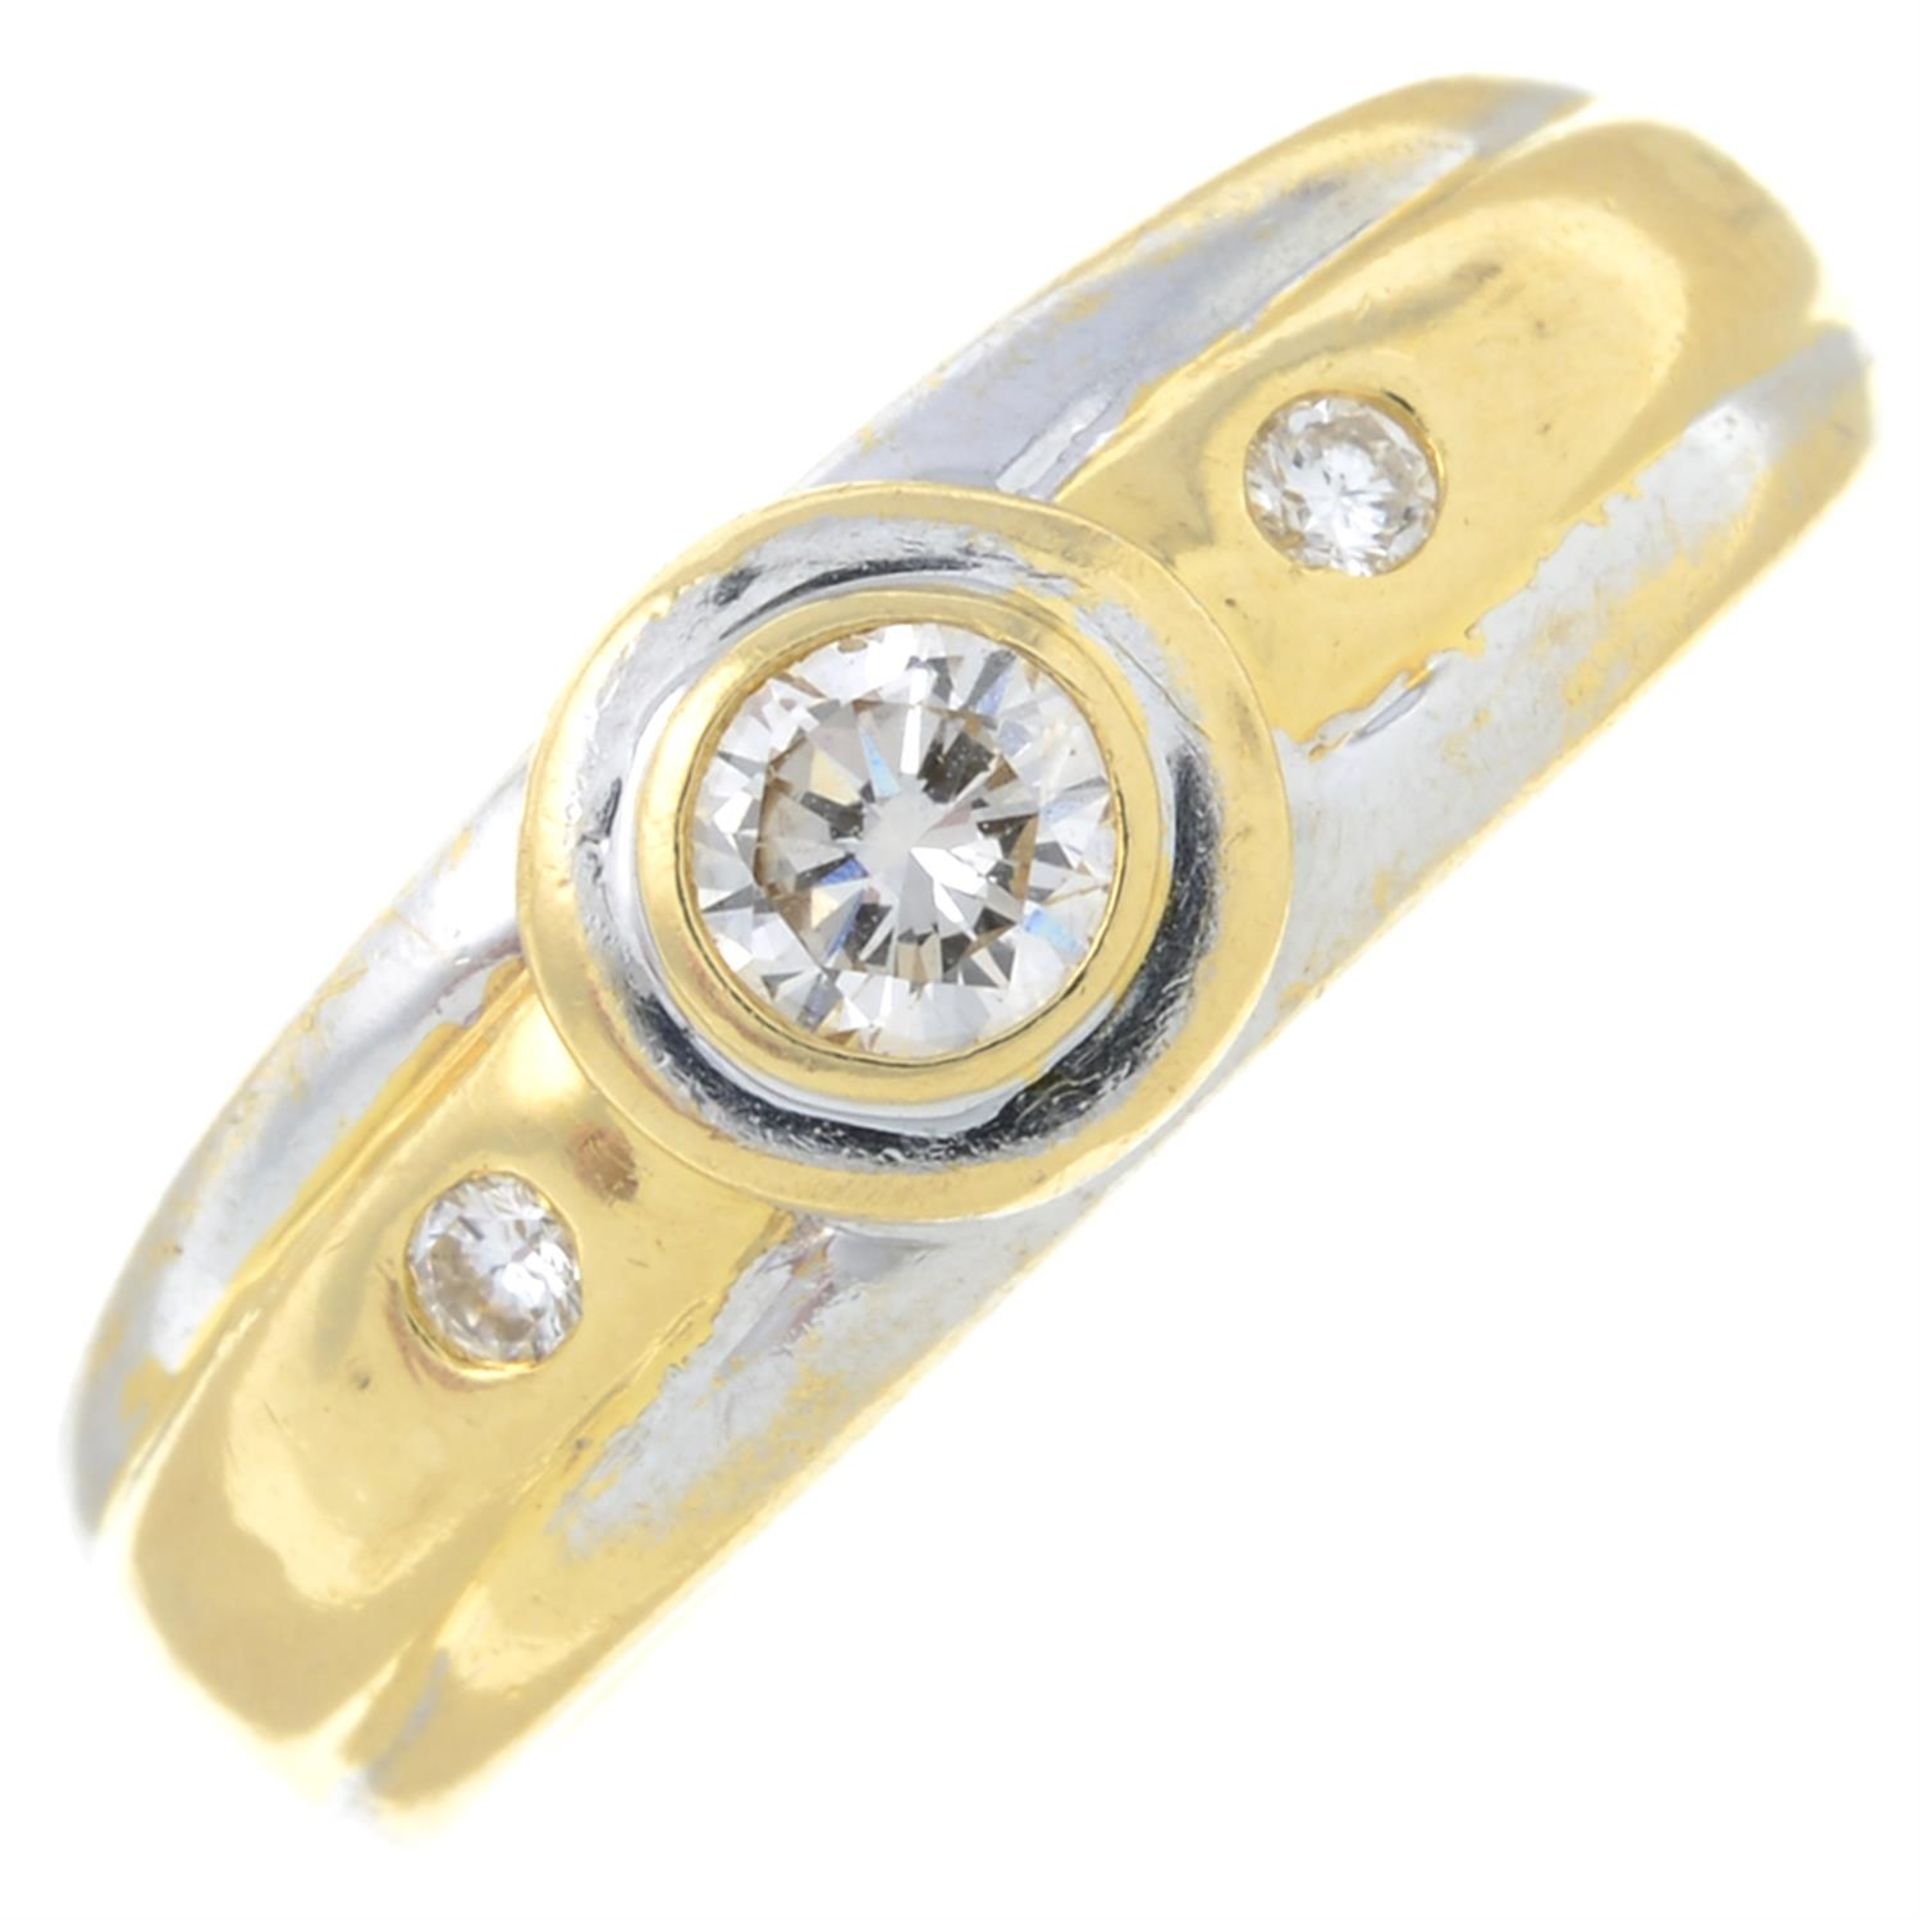 A brilliant-cut diamond band ring.